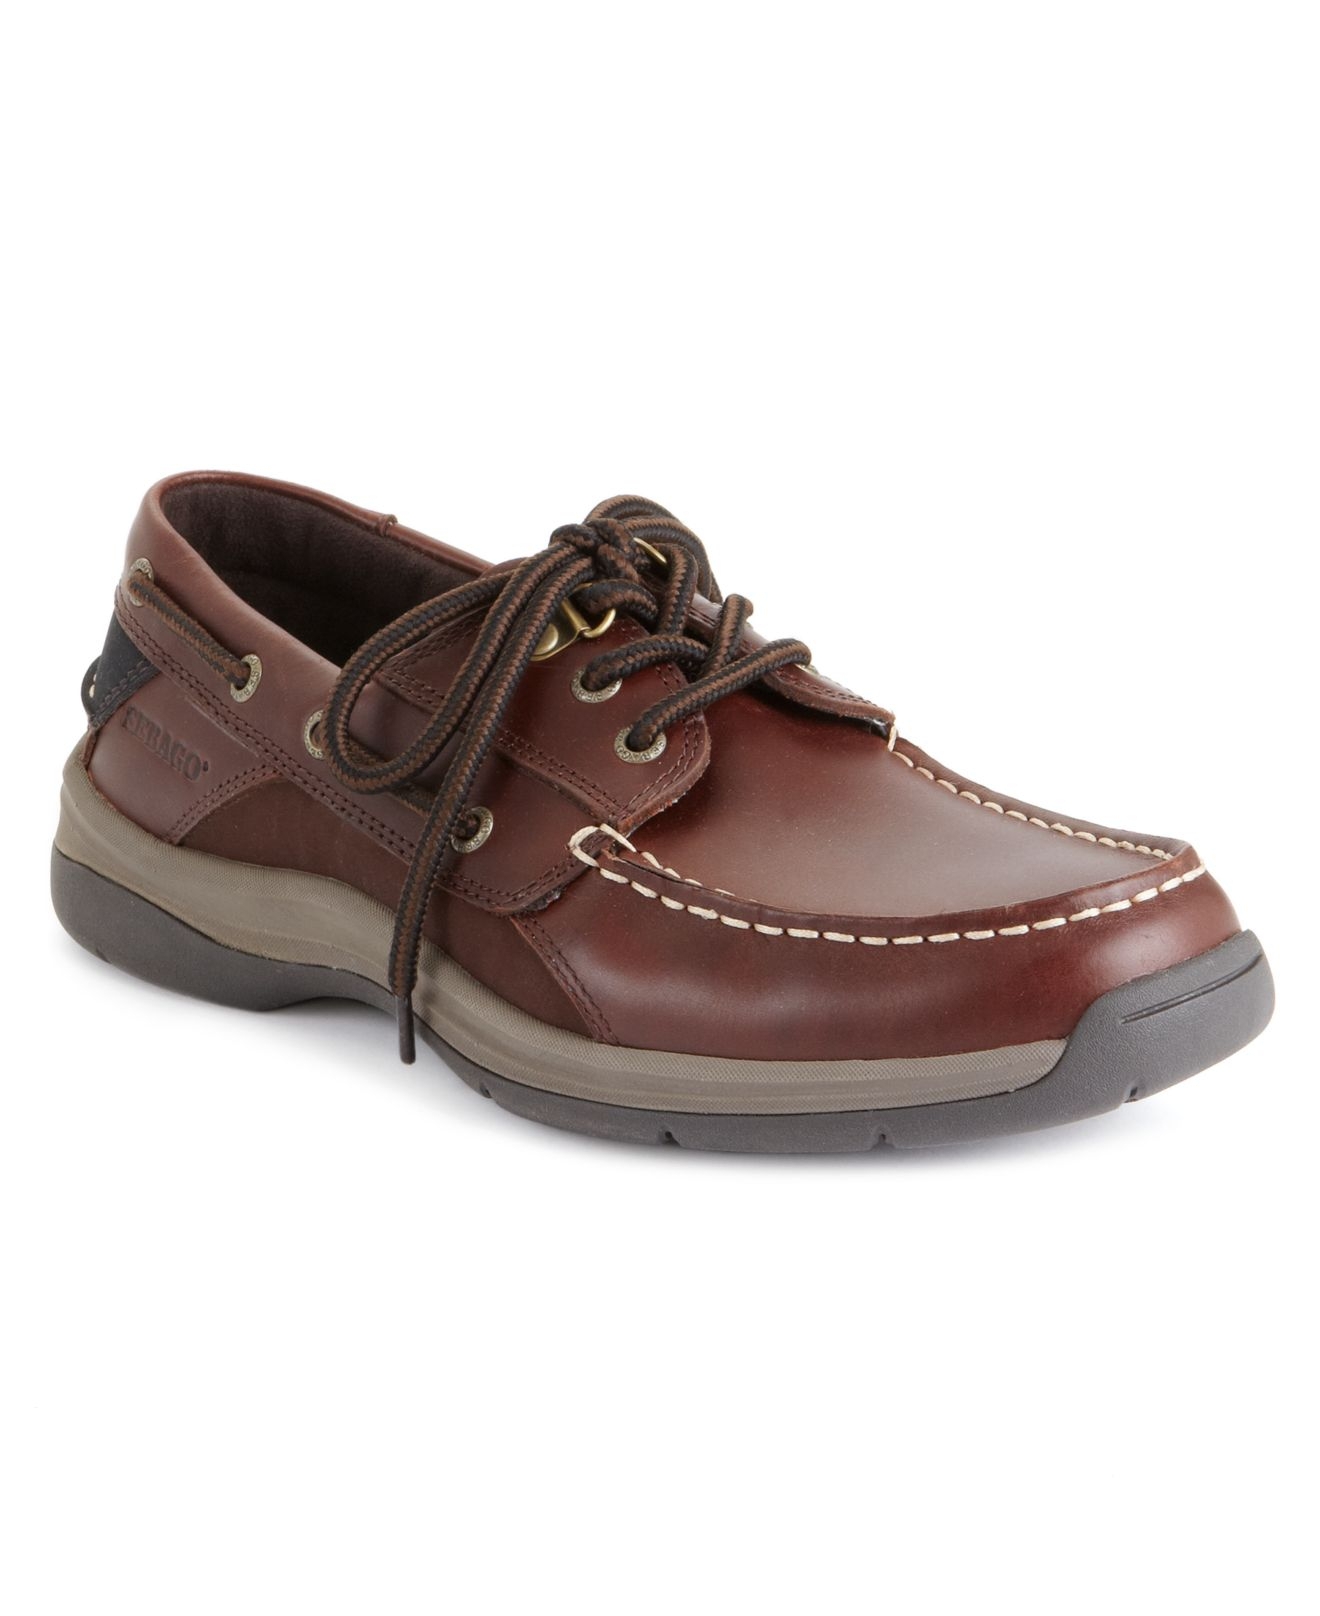 Lyst - Sebago Helsman Boat Shoes in Brown for Men